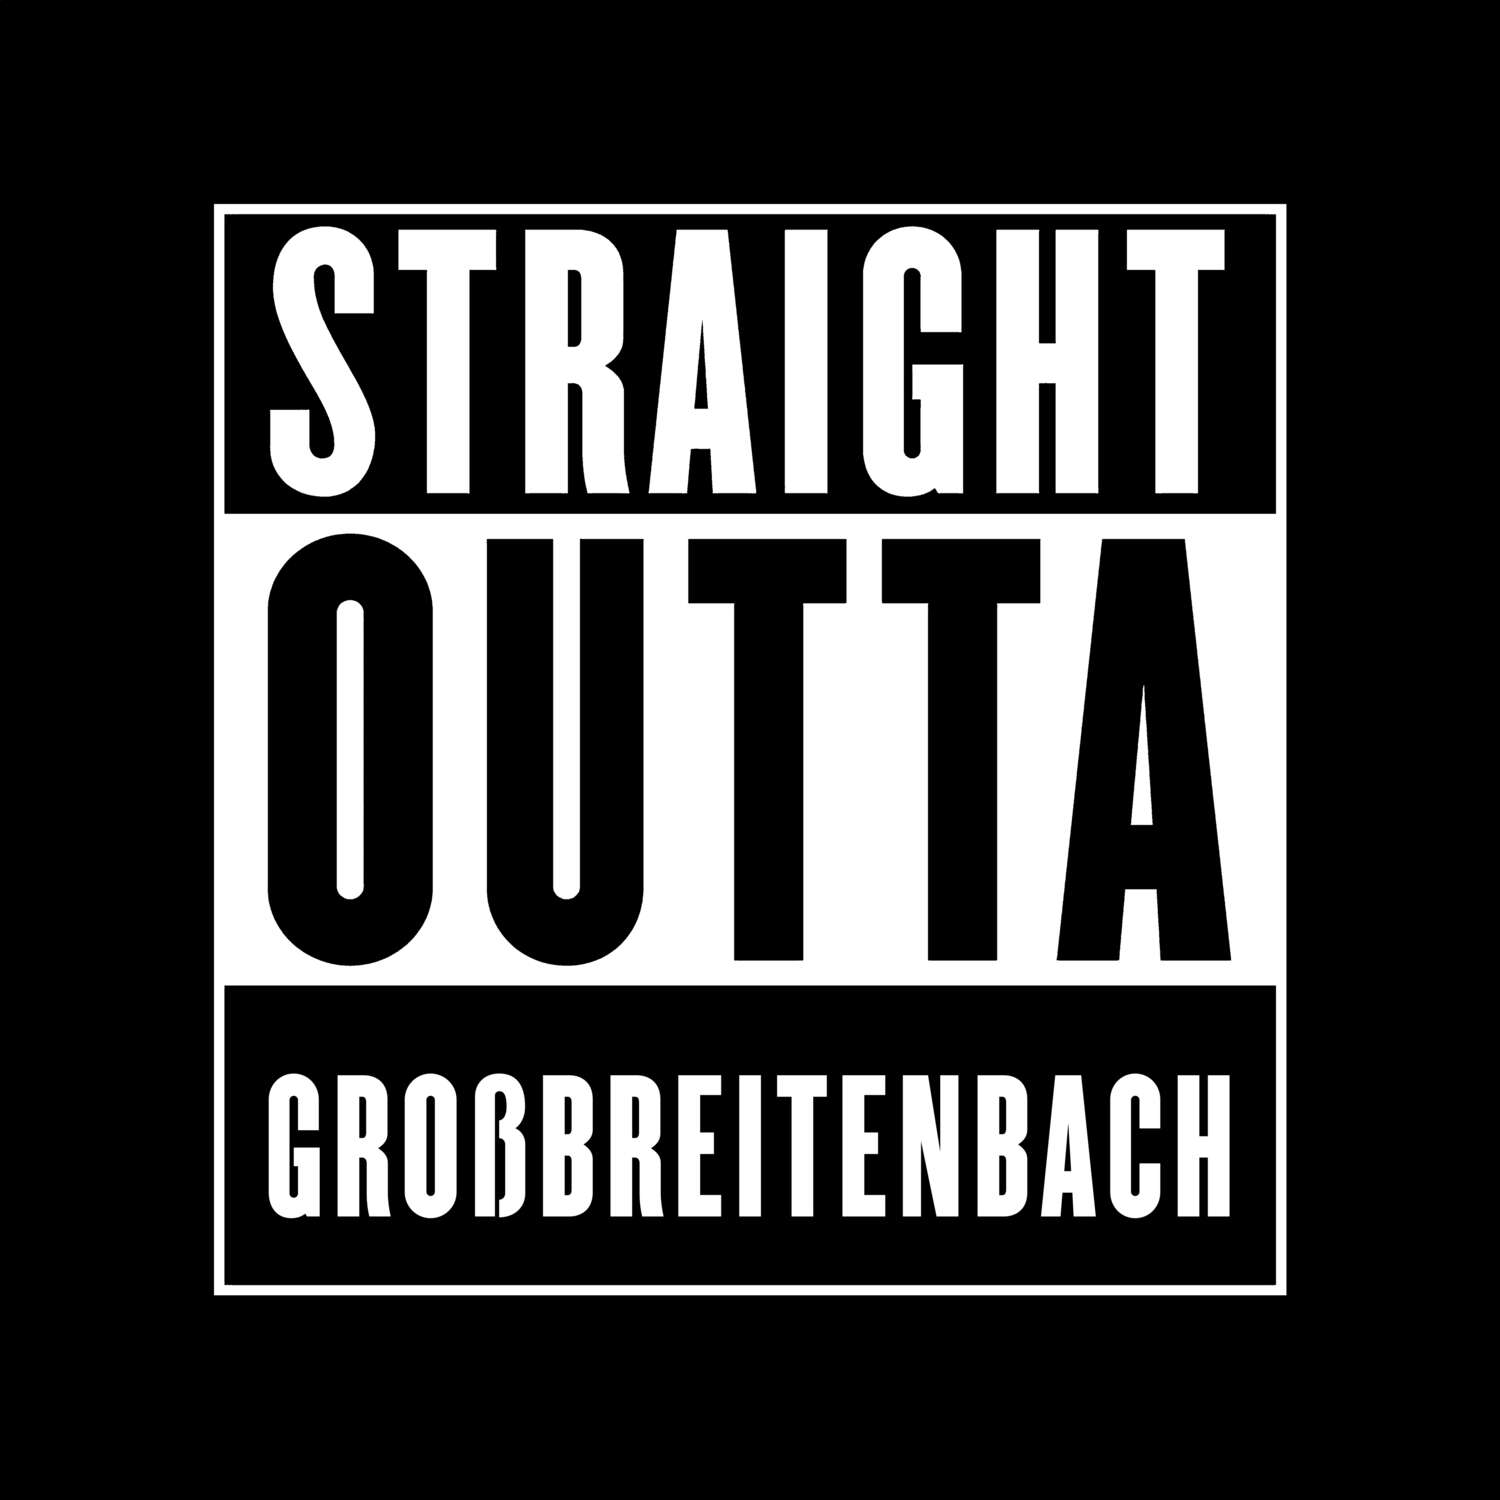 Großbreitenbach T-Shirt »Straight Outta«